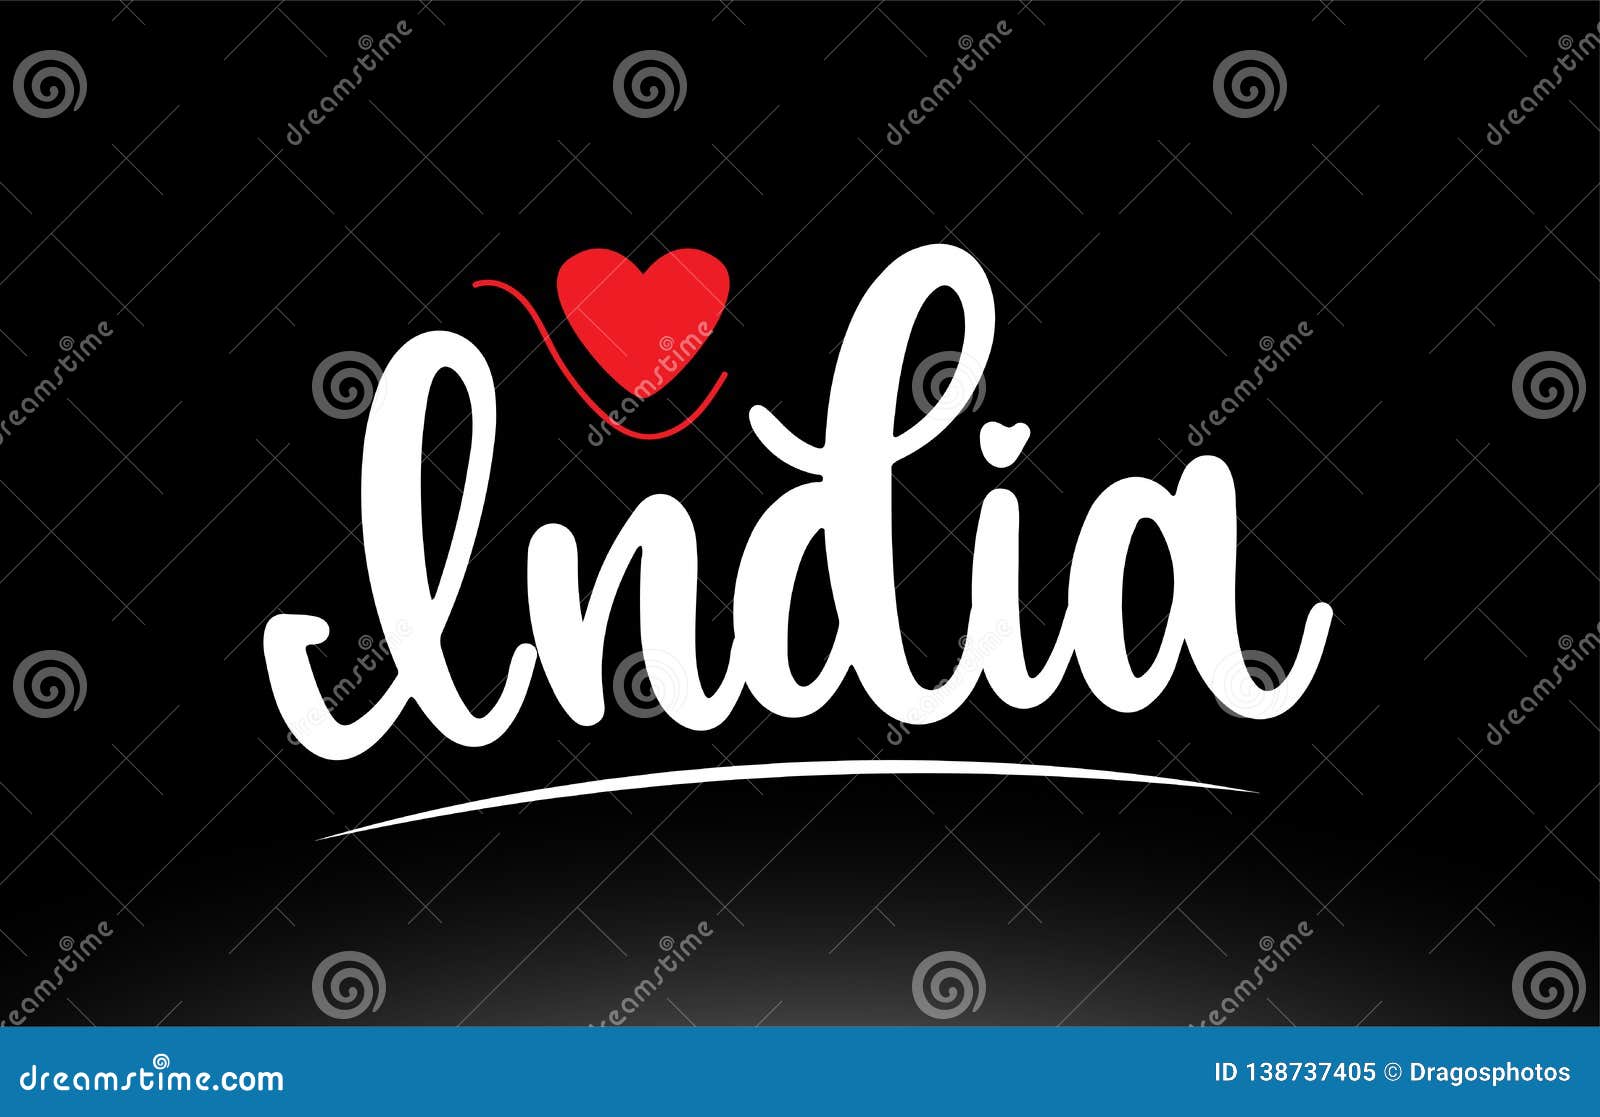 Digital India Logo – SAMIR